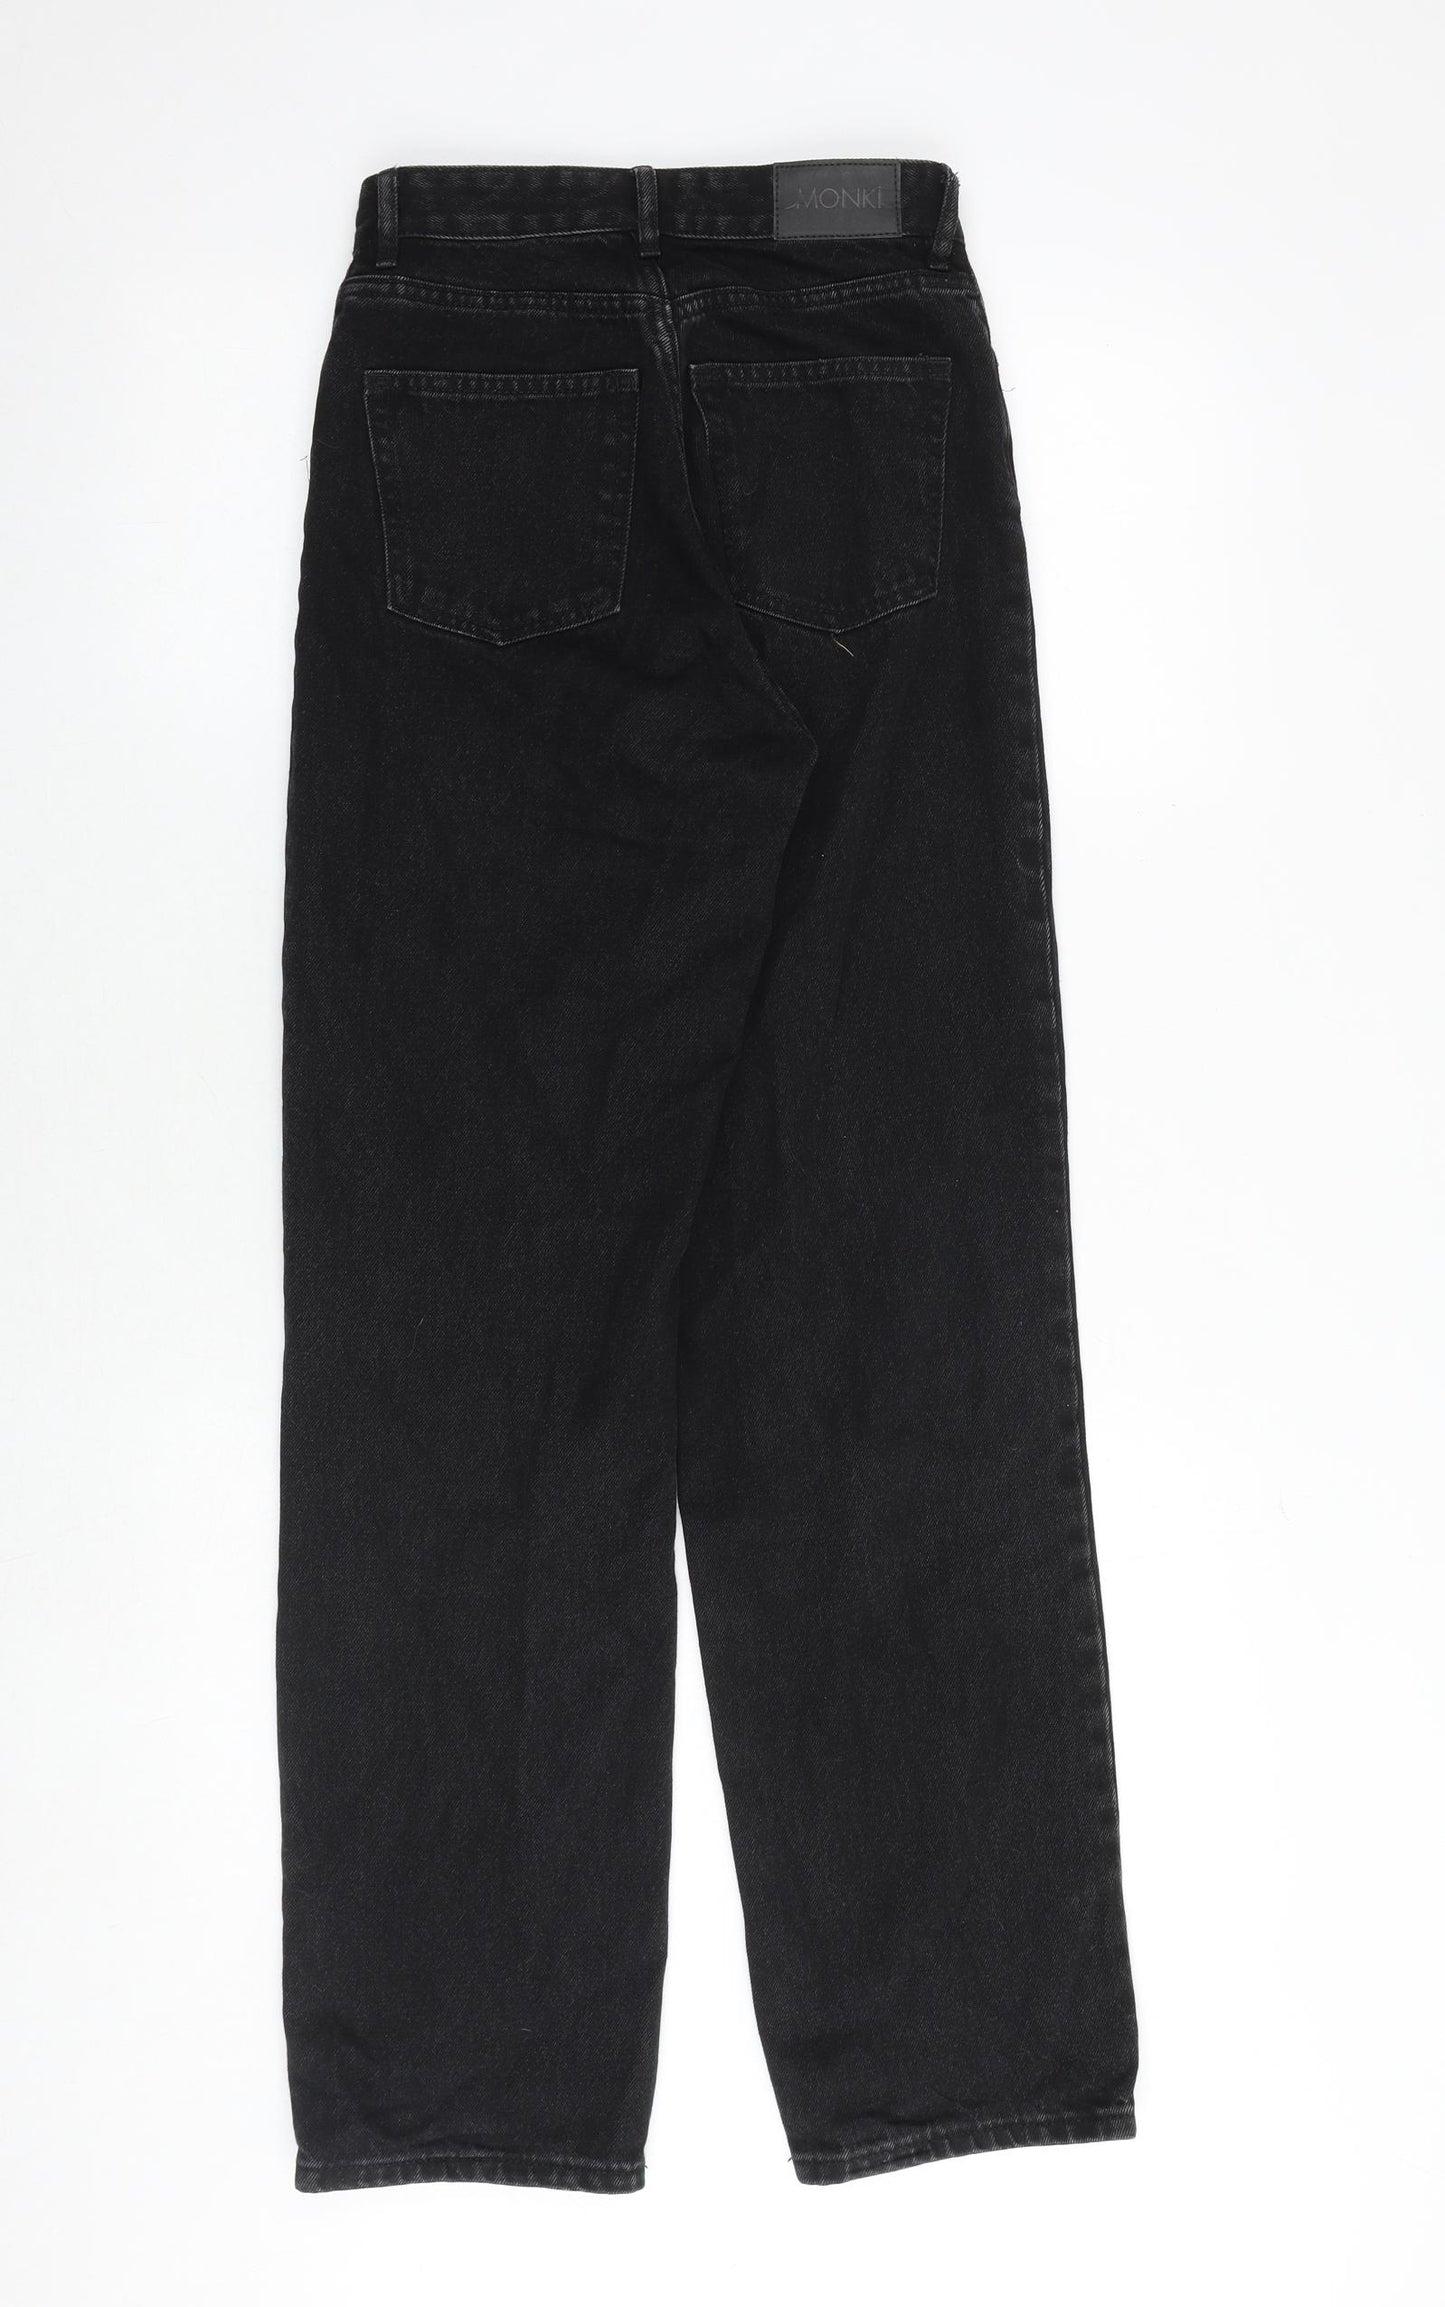 Monki Womens Black Cotton Straight Jeans Size 24 in Regular Zip